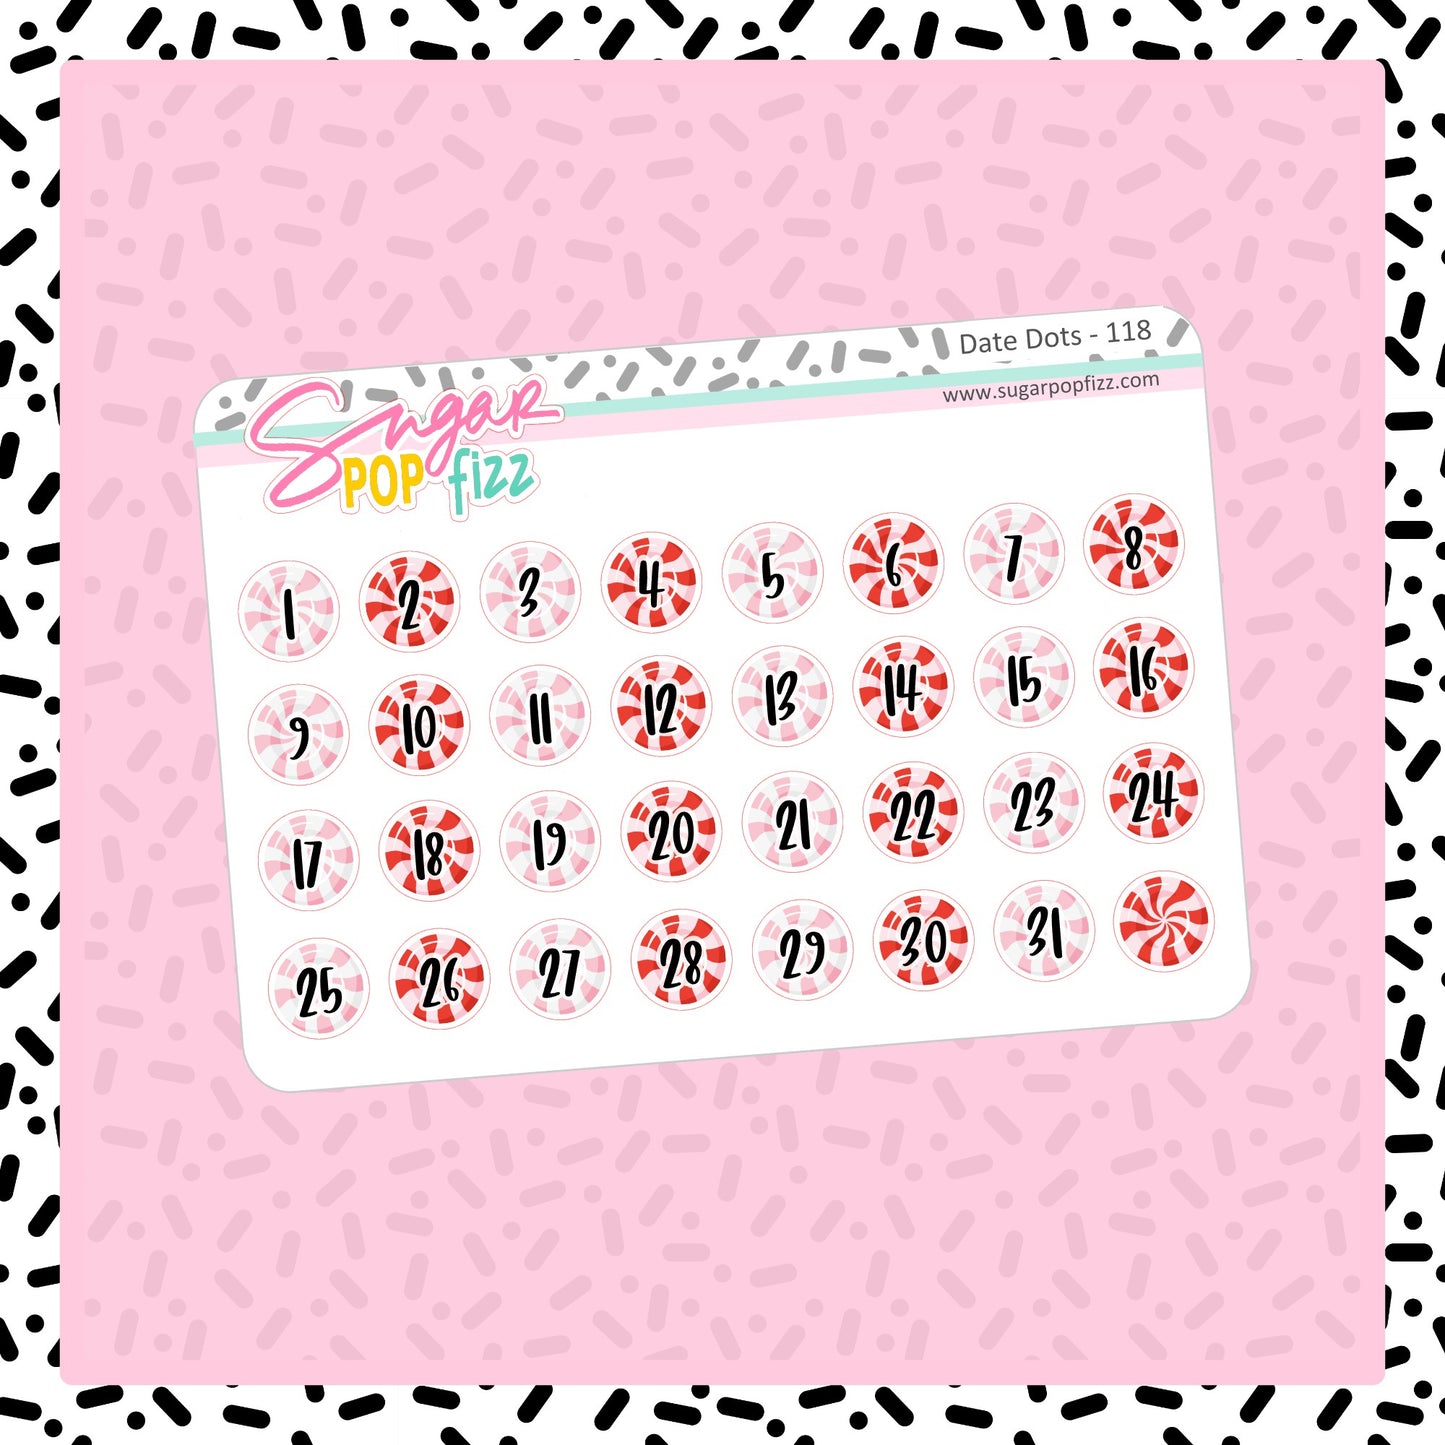 Peppermint Date Dot Stickers -DD118